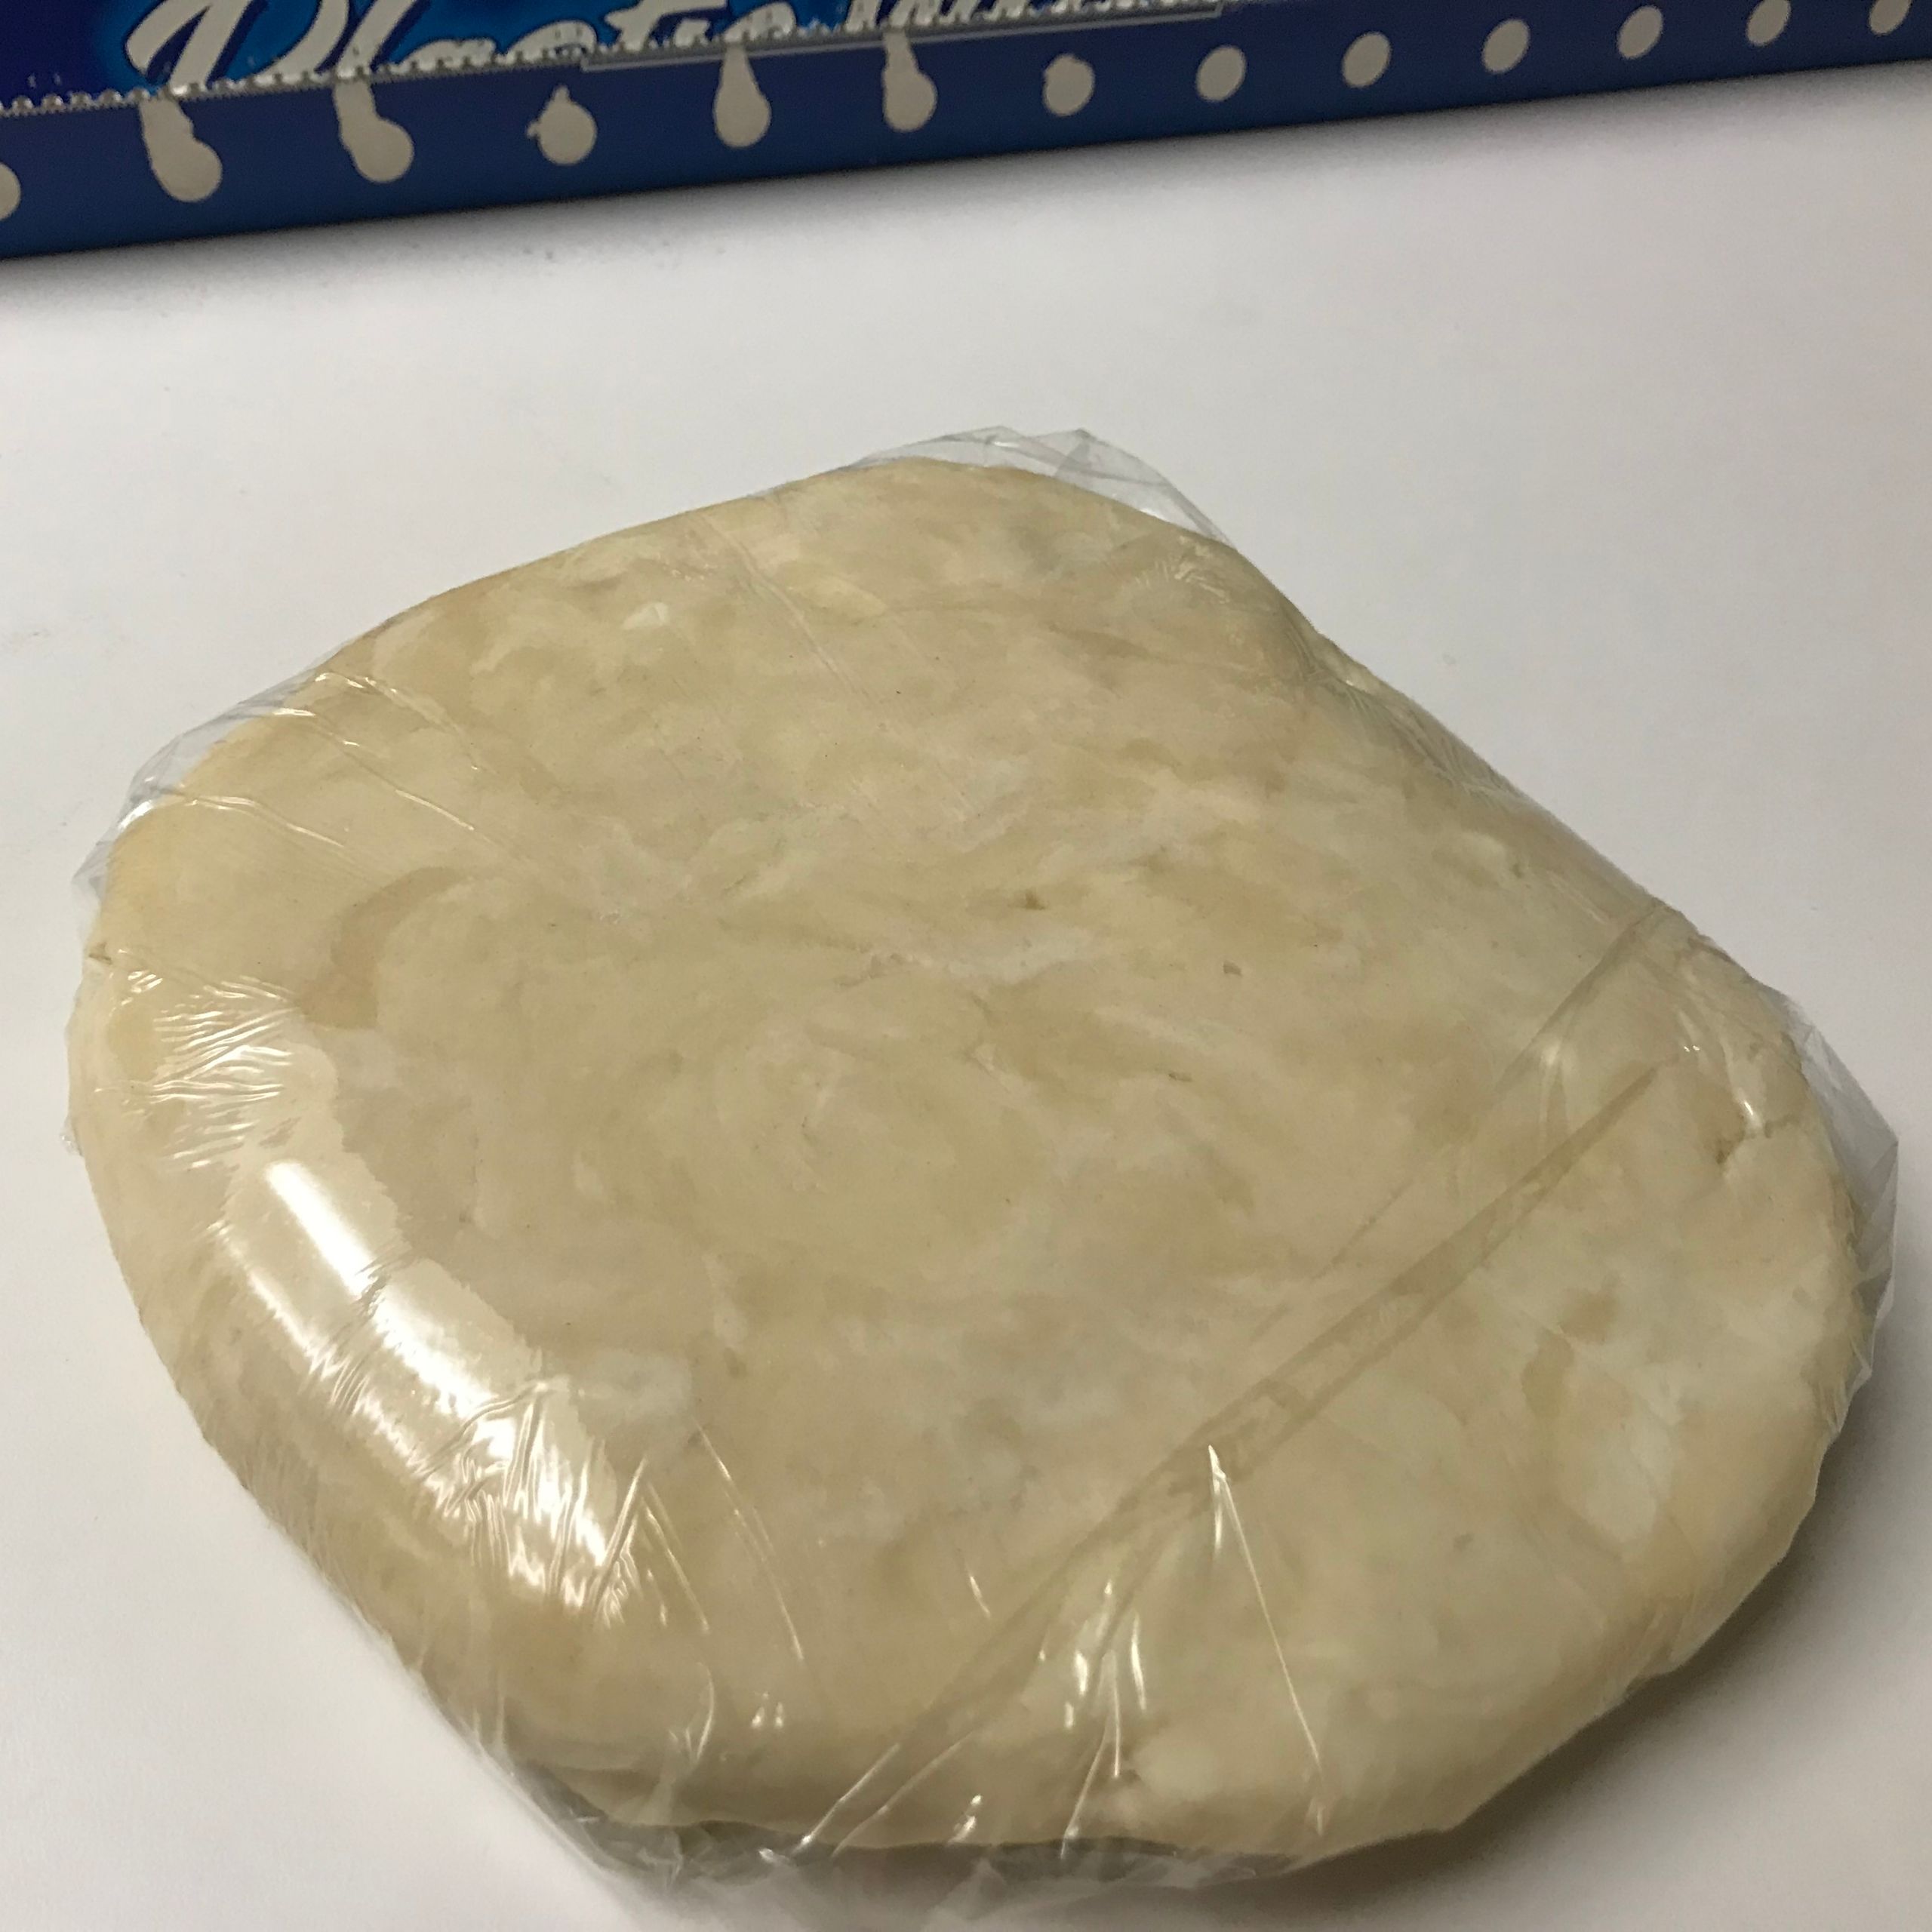 Wrapped dough